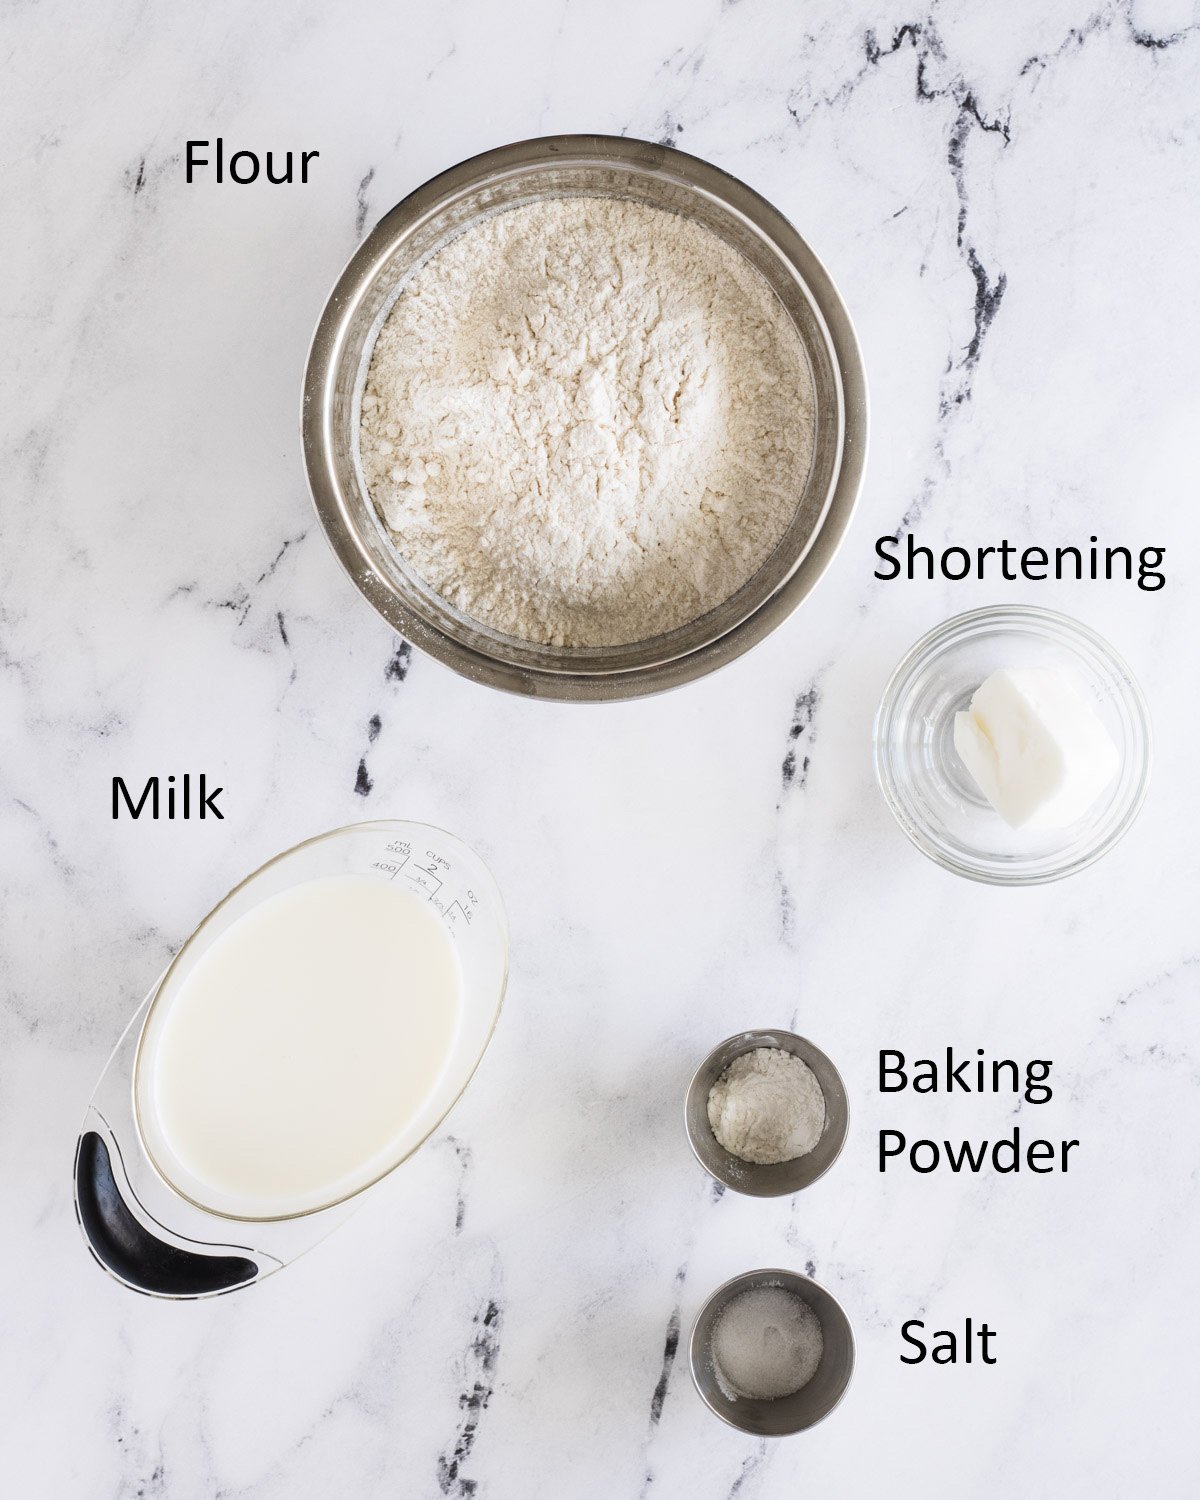 New Mexican Sopapilla ingredients: Flour, milk, shortening, baking powder, and salt.